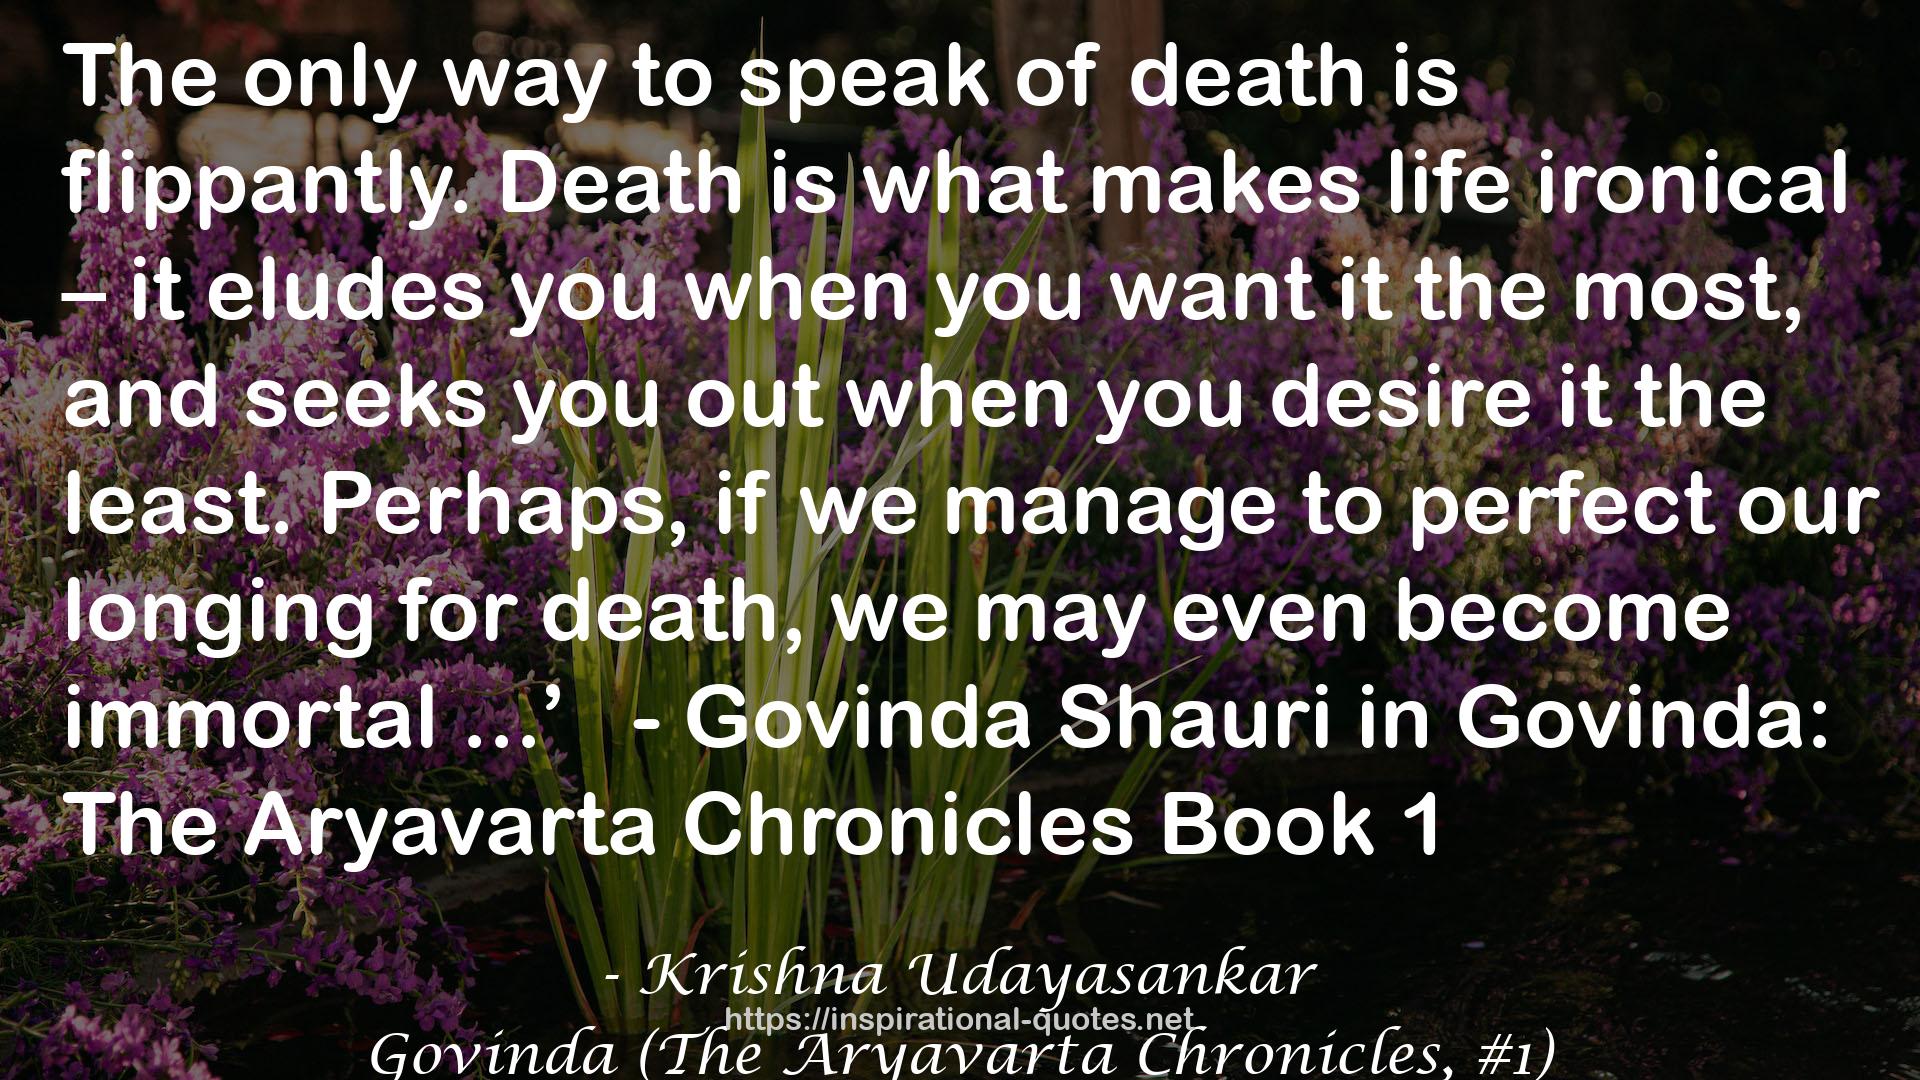 Govinda (The Aryavarta Chronicles, #1) QUOTES